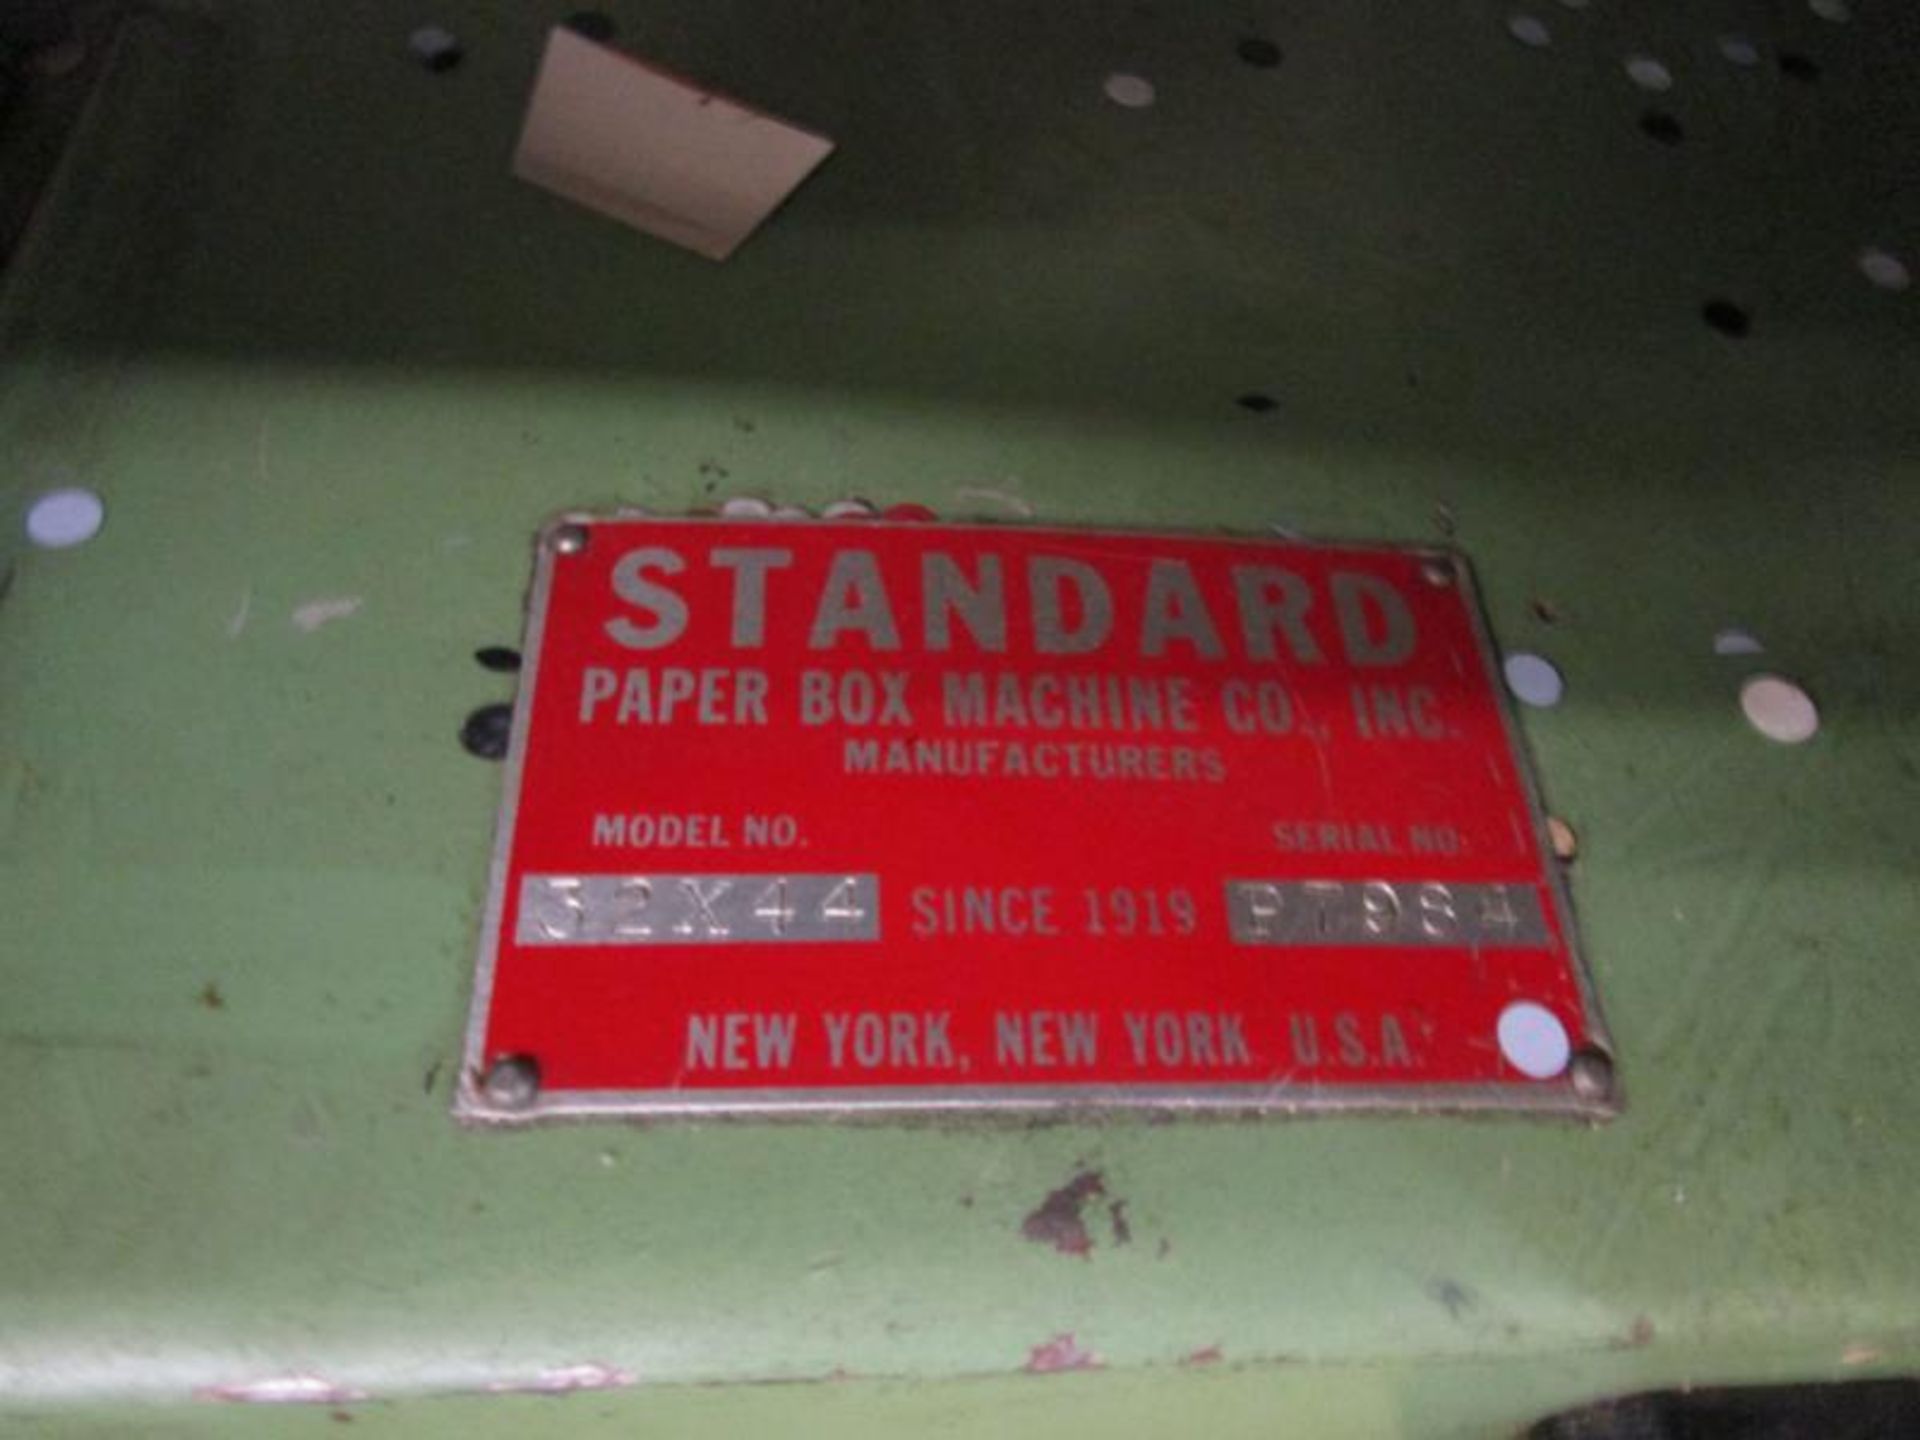 Standard Paper Box Machine Die Cutter, Model: 32X44, SN: P7984 - Image 4 of 7